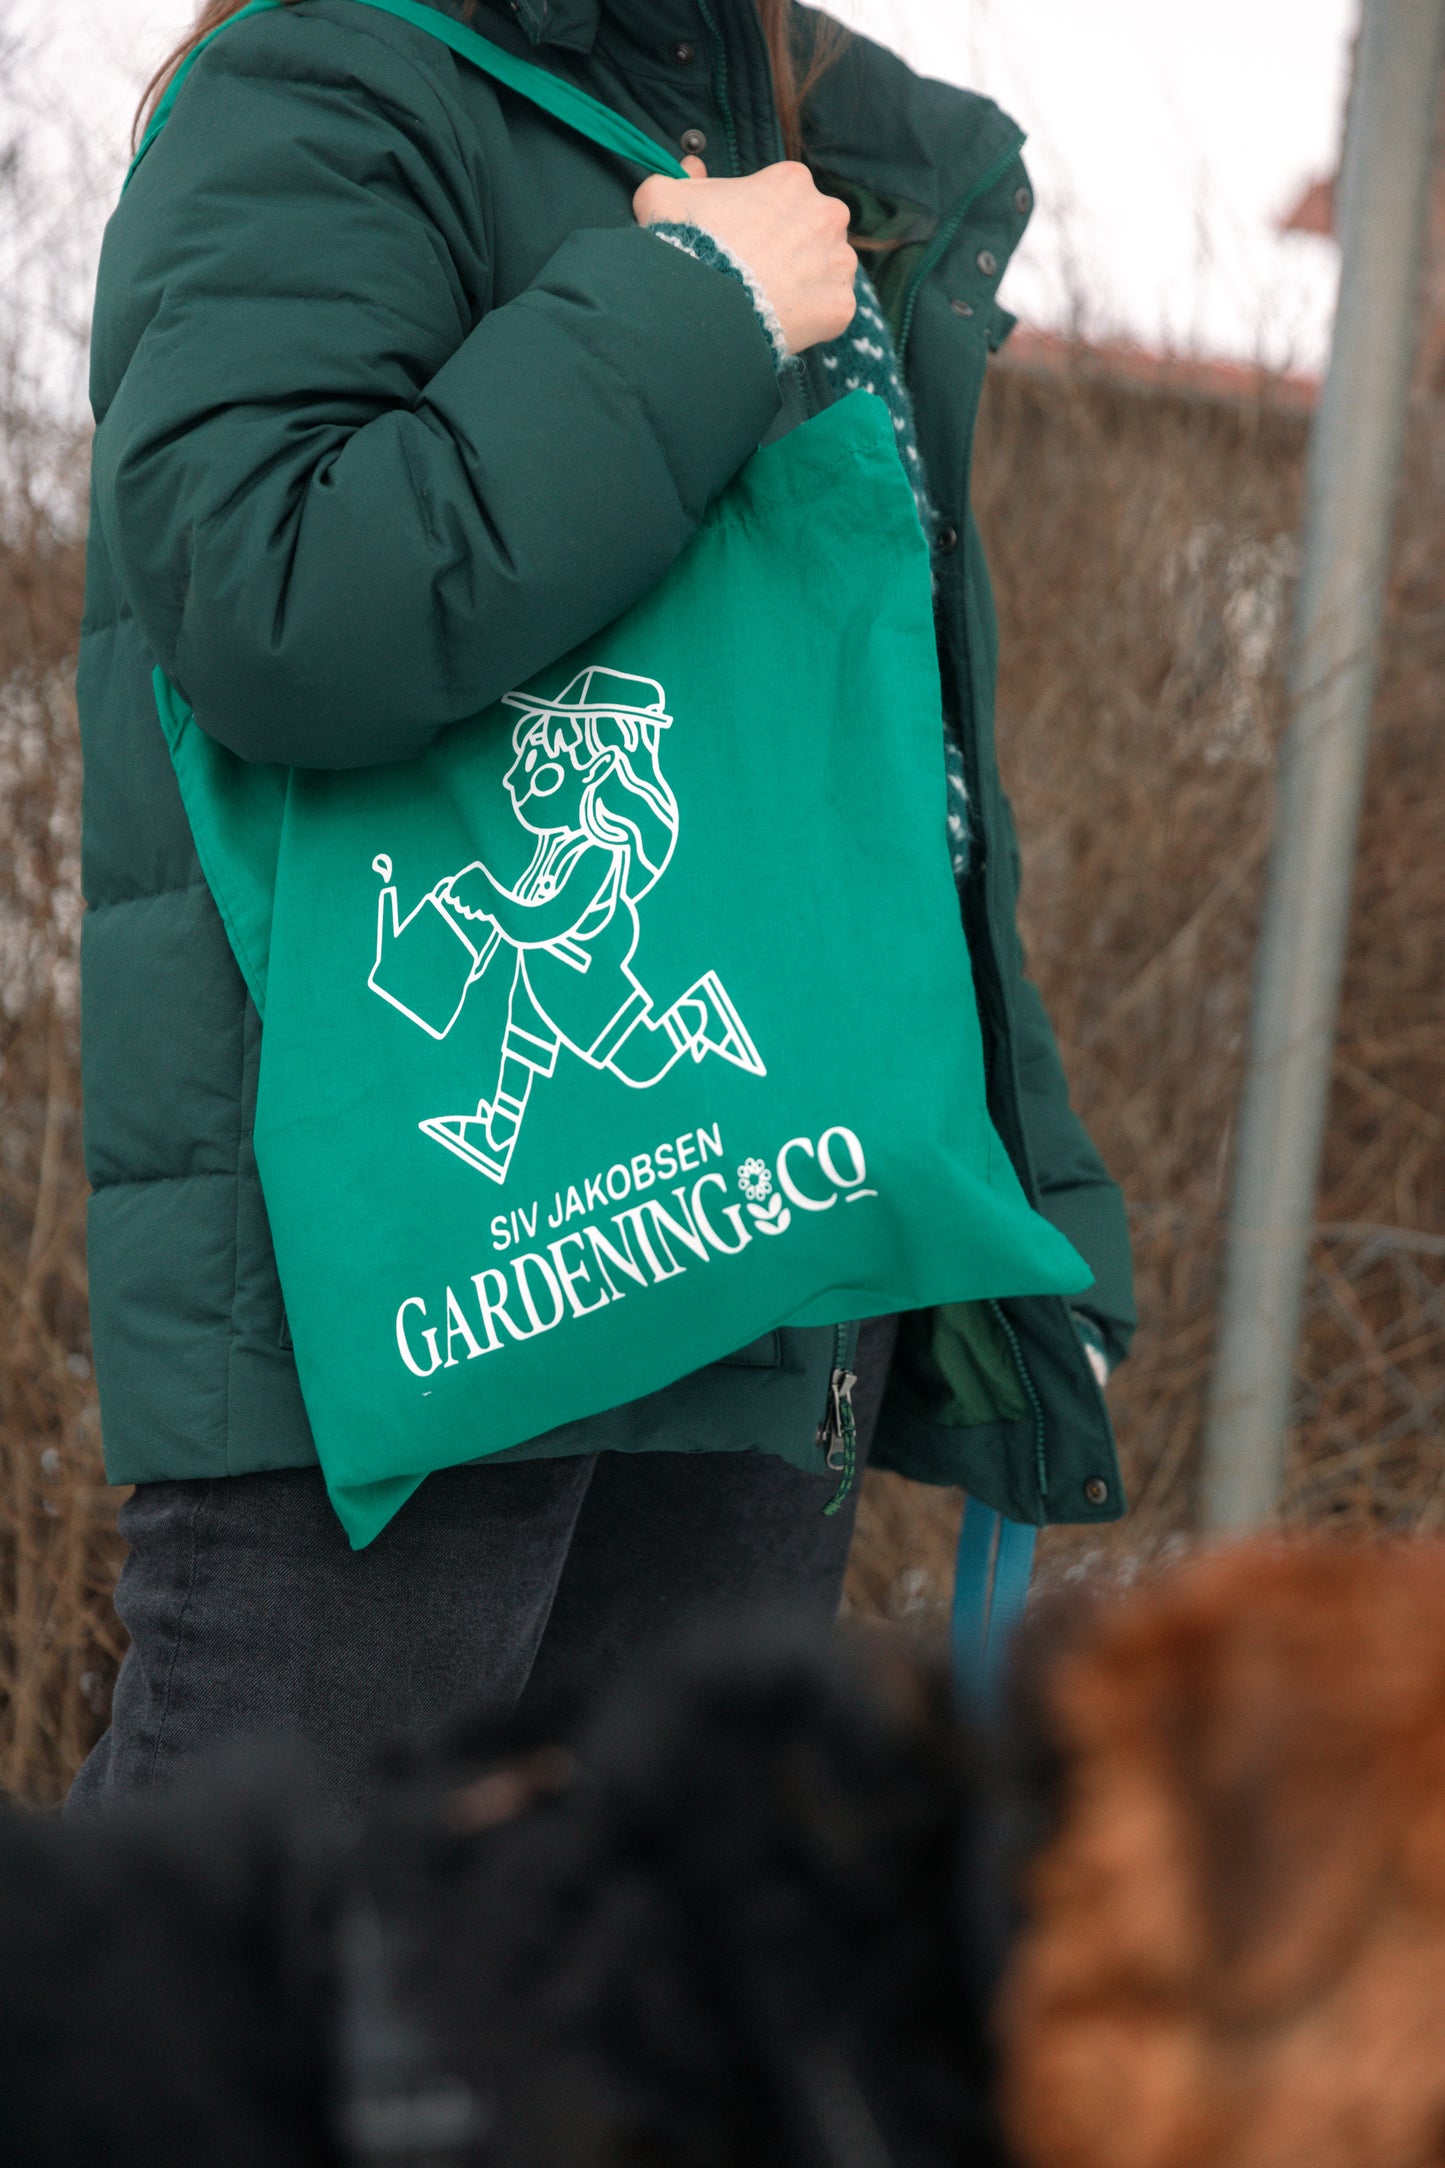 Siv Jakobsen Gardening Co Tote-Bag (GREEN)